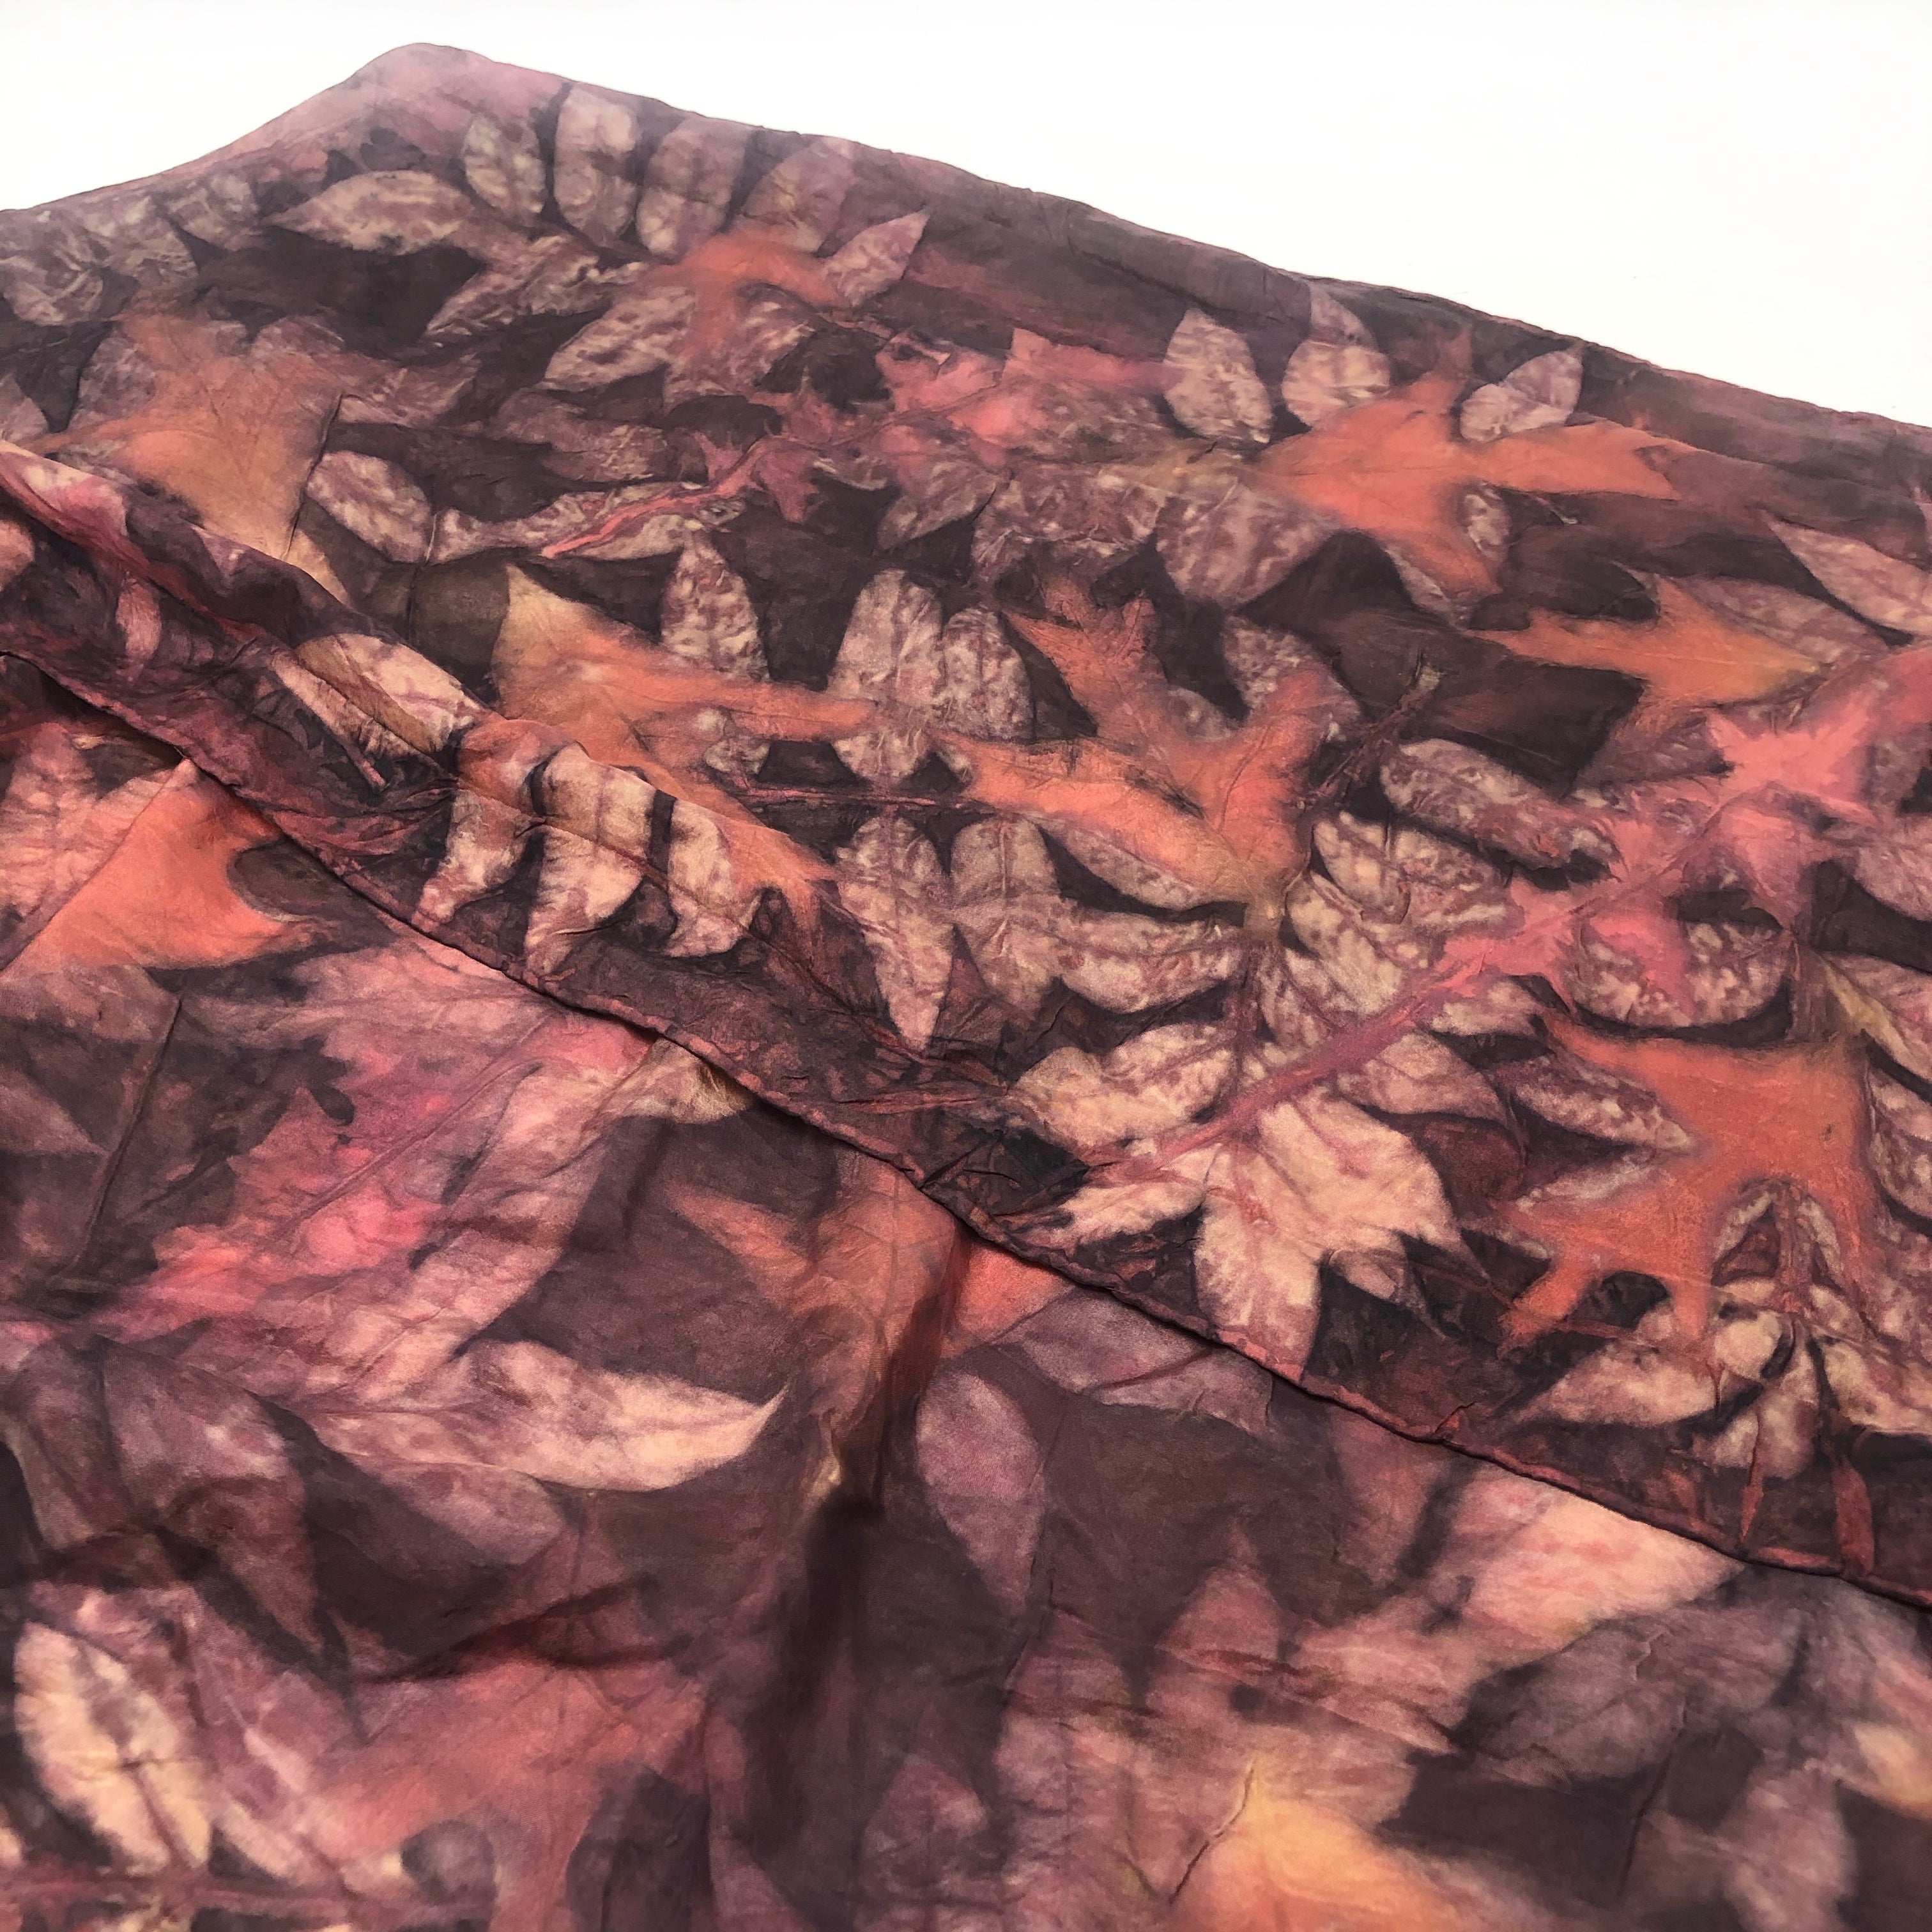 Habotai Silk Scarf - Eco printed - plant dyed